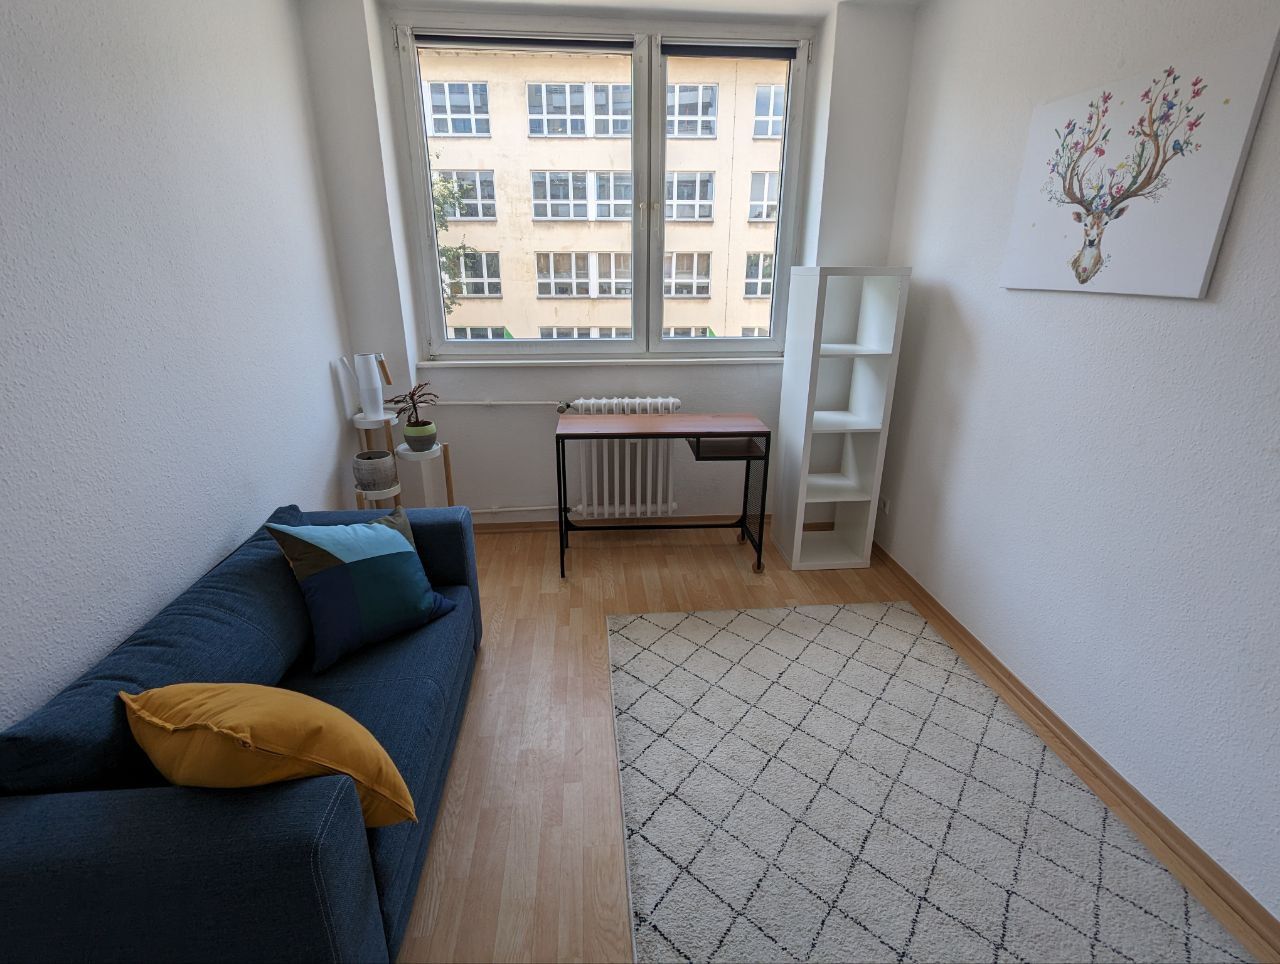 2 bedroom appartment very close to Gesundbrunnen station